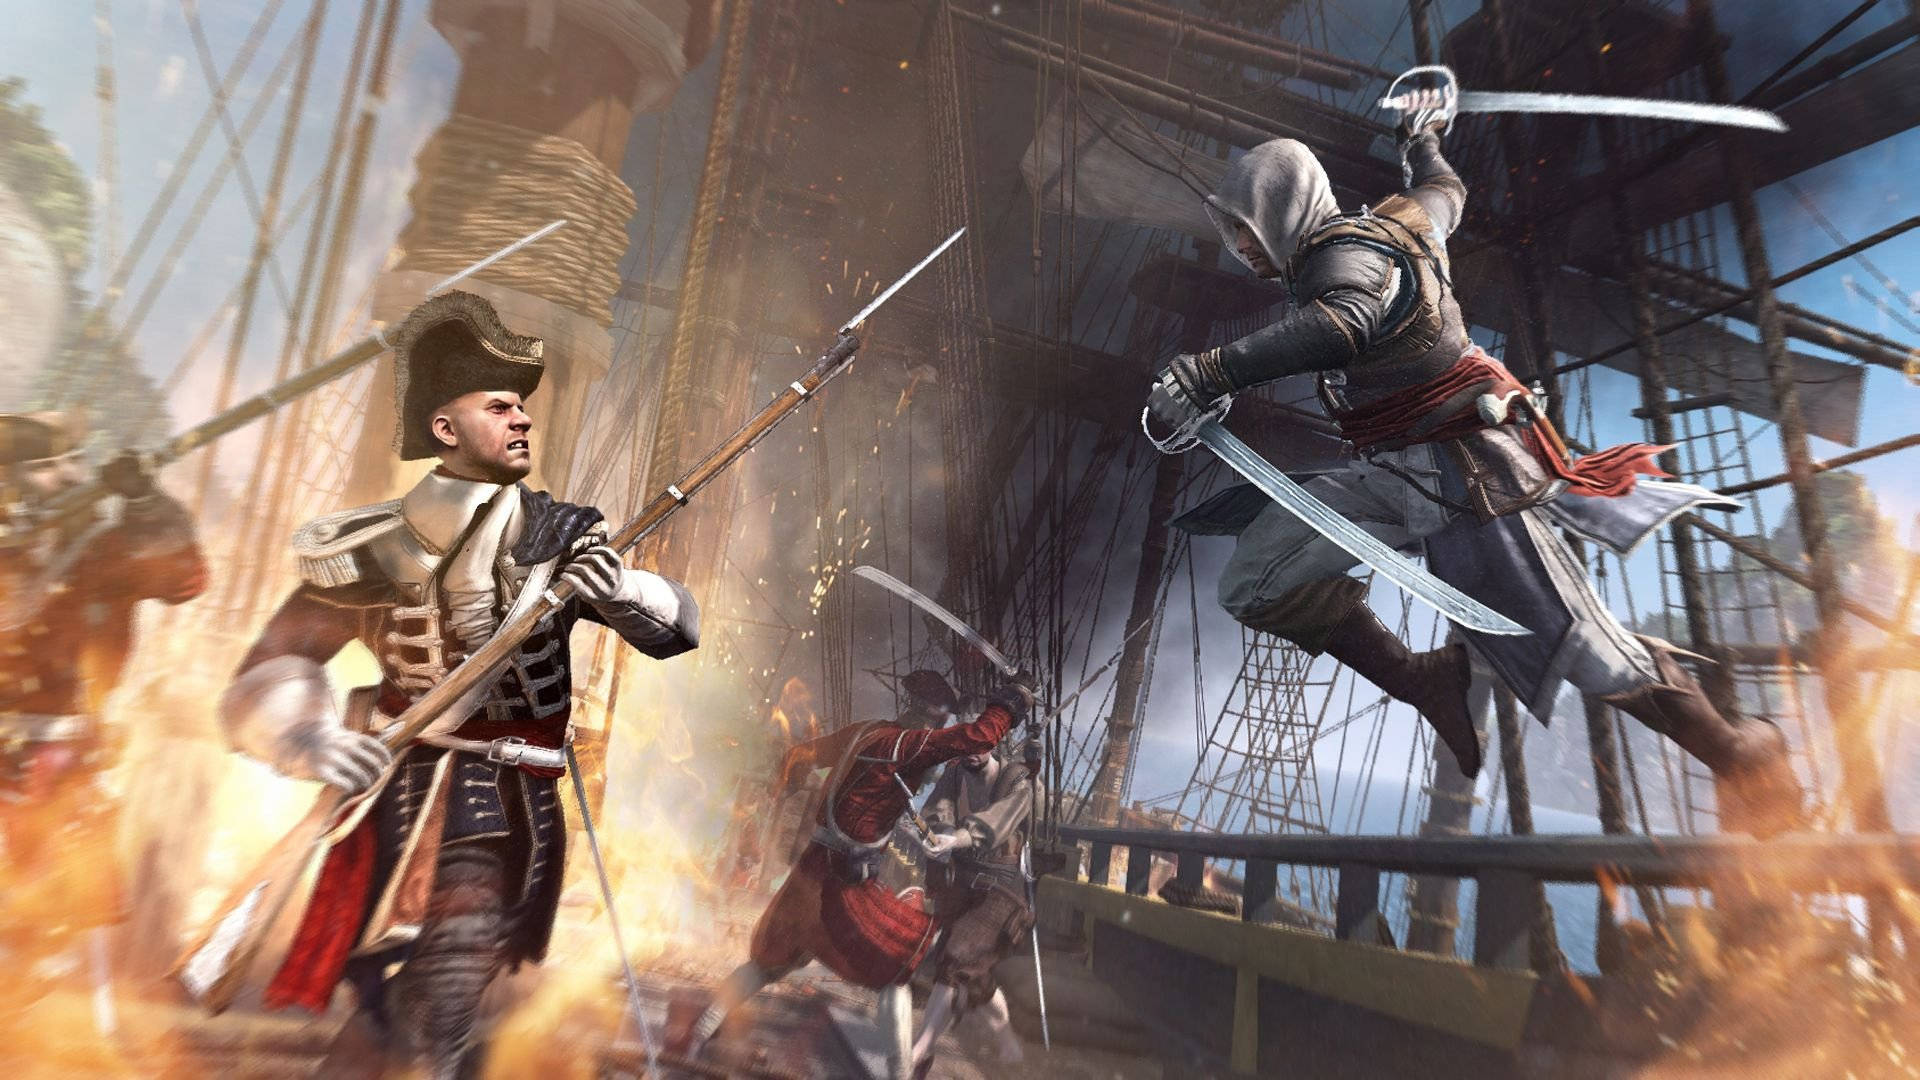 Jumping Assassin's Creed Black Flag Scene Background